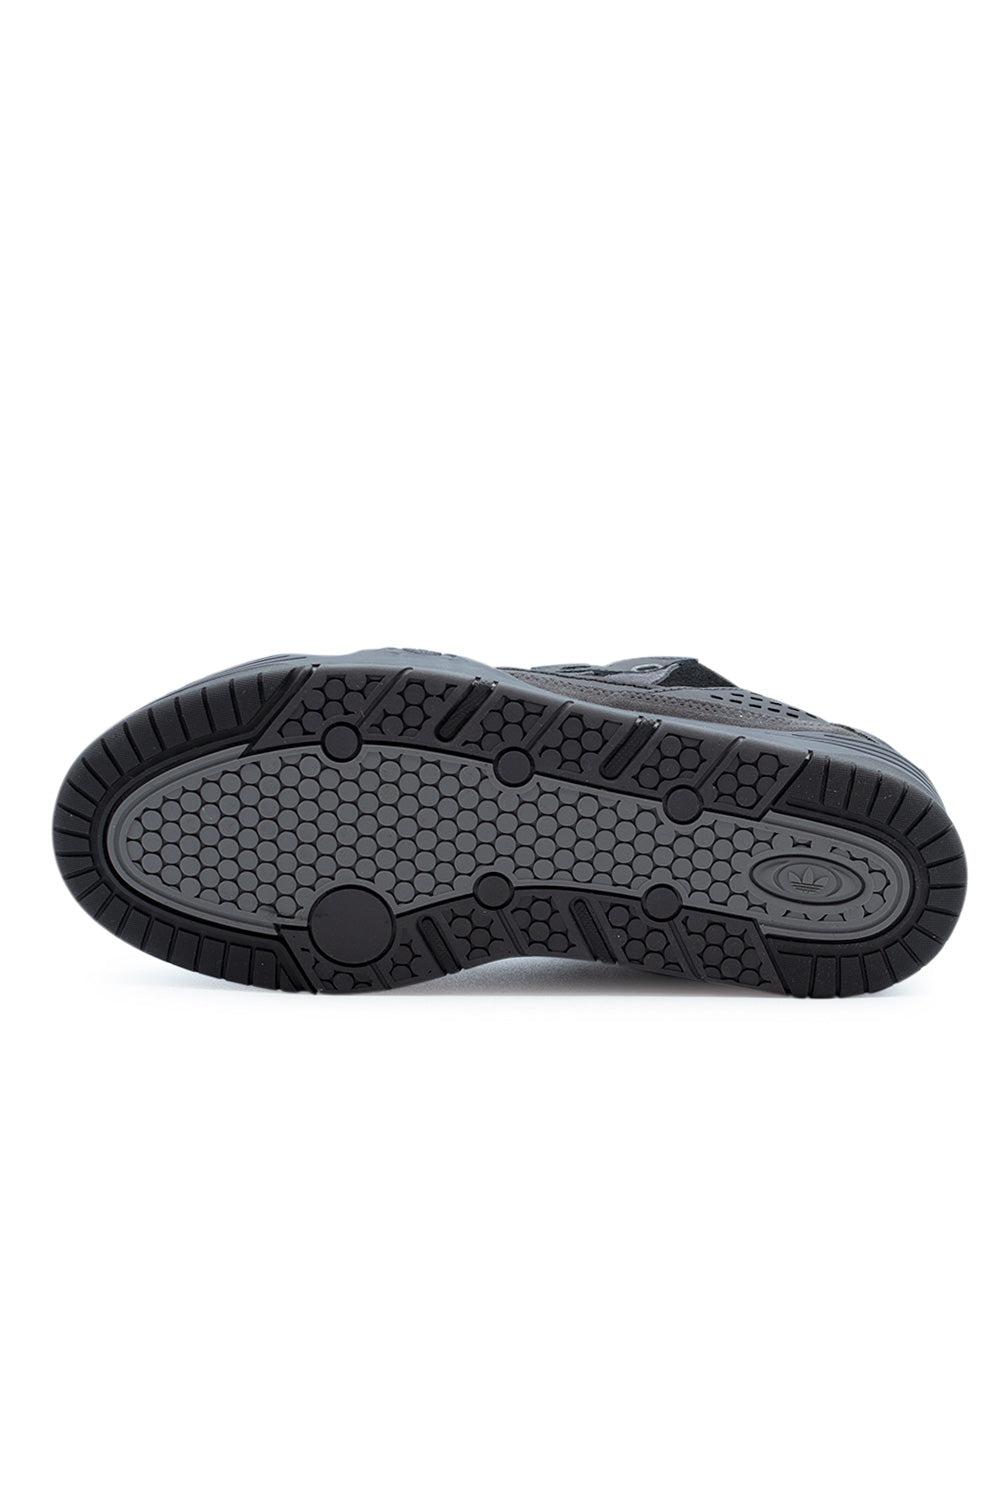 Adidas Adi2000 Shoe Core Black | / Black BONKERS / Utility Utility Black